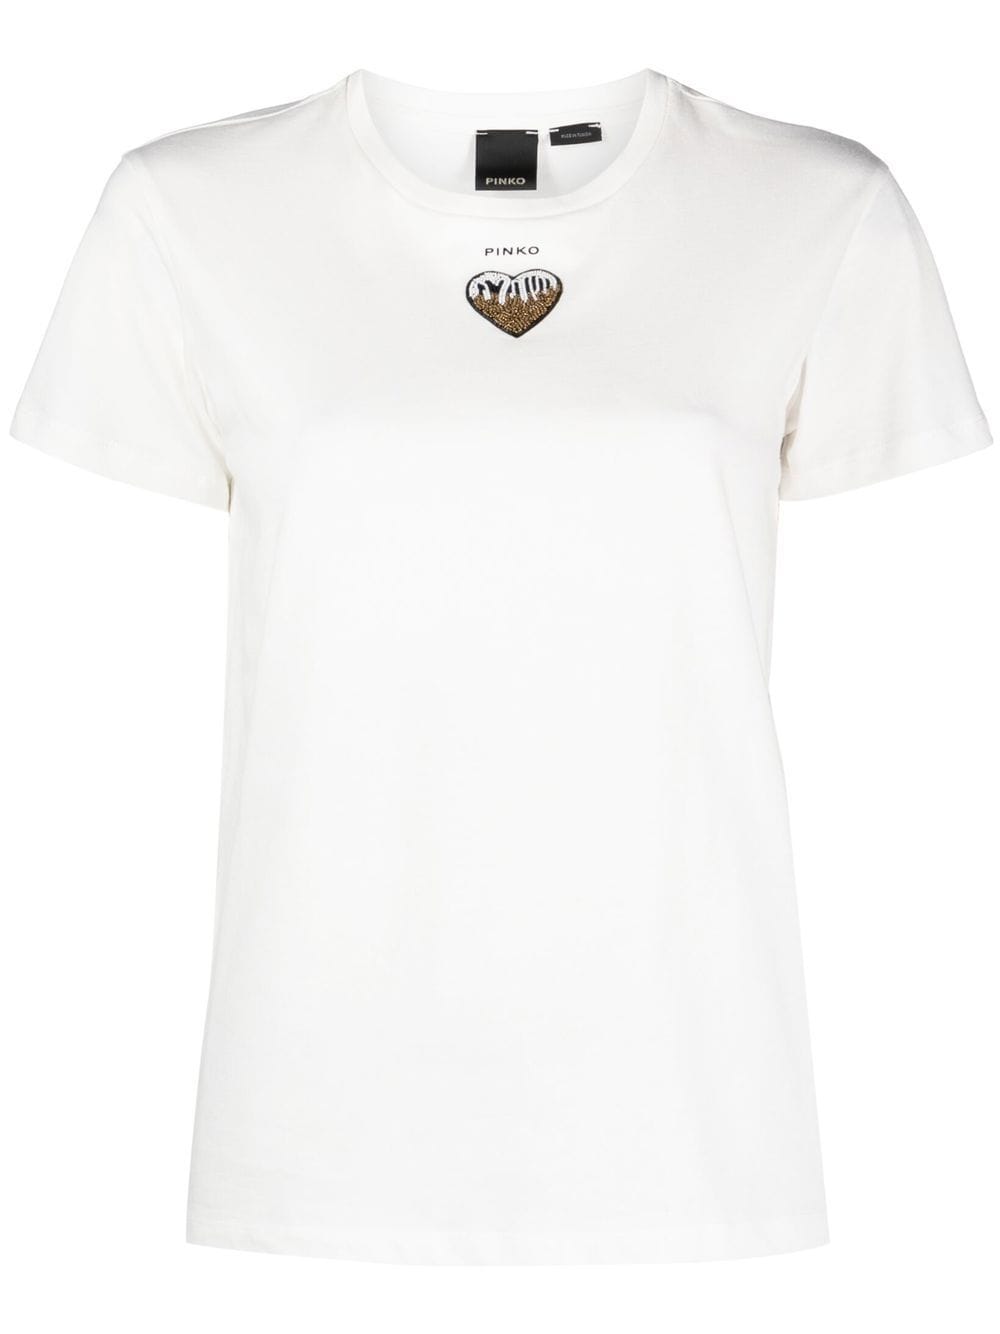 privacy Portiek Maestro Pinko Trapani Love Birds T-shirt In White | ModeSens